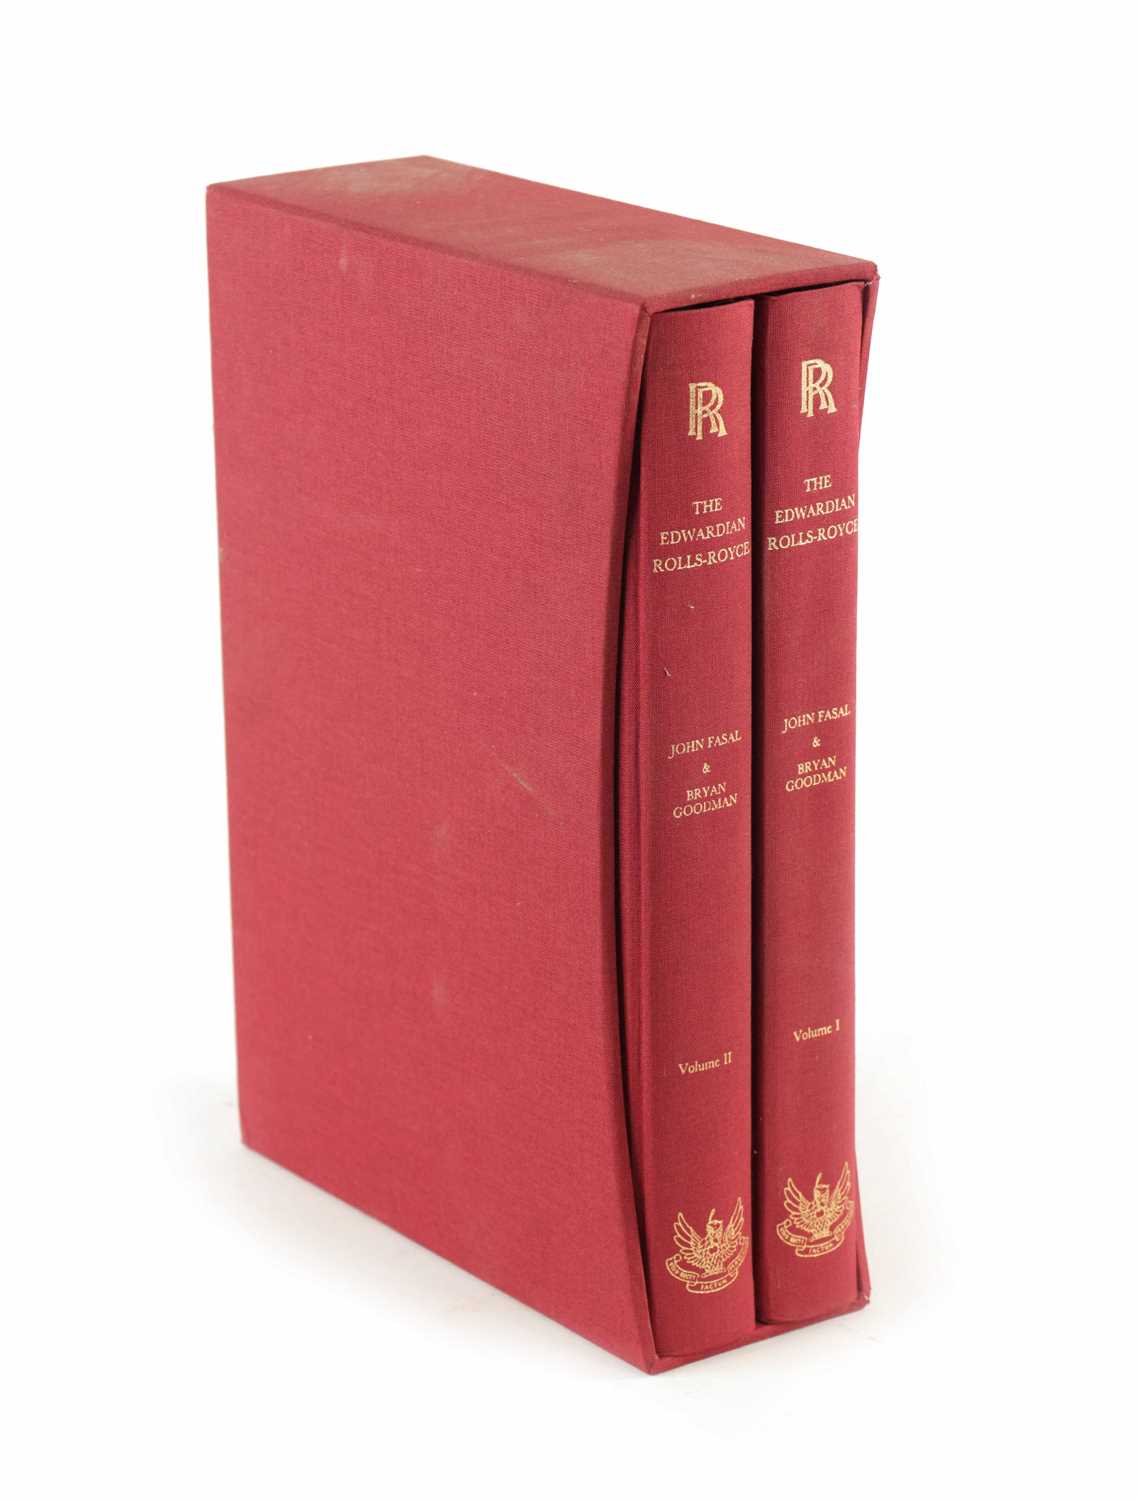 Lot 55 - THE EDWARDIAN ROLLS-ROYCE. A PAIR OF HARDBACK BOOKS BY JOHN FASIL & BRYAN GOODMAN